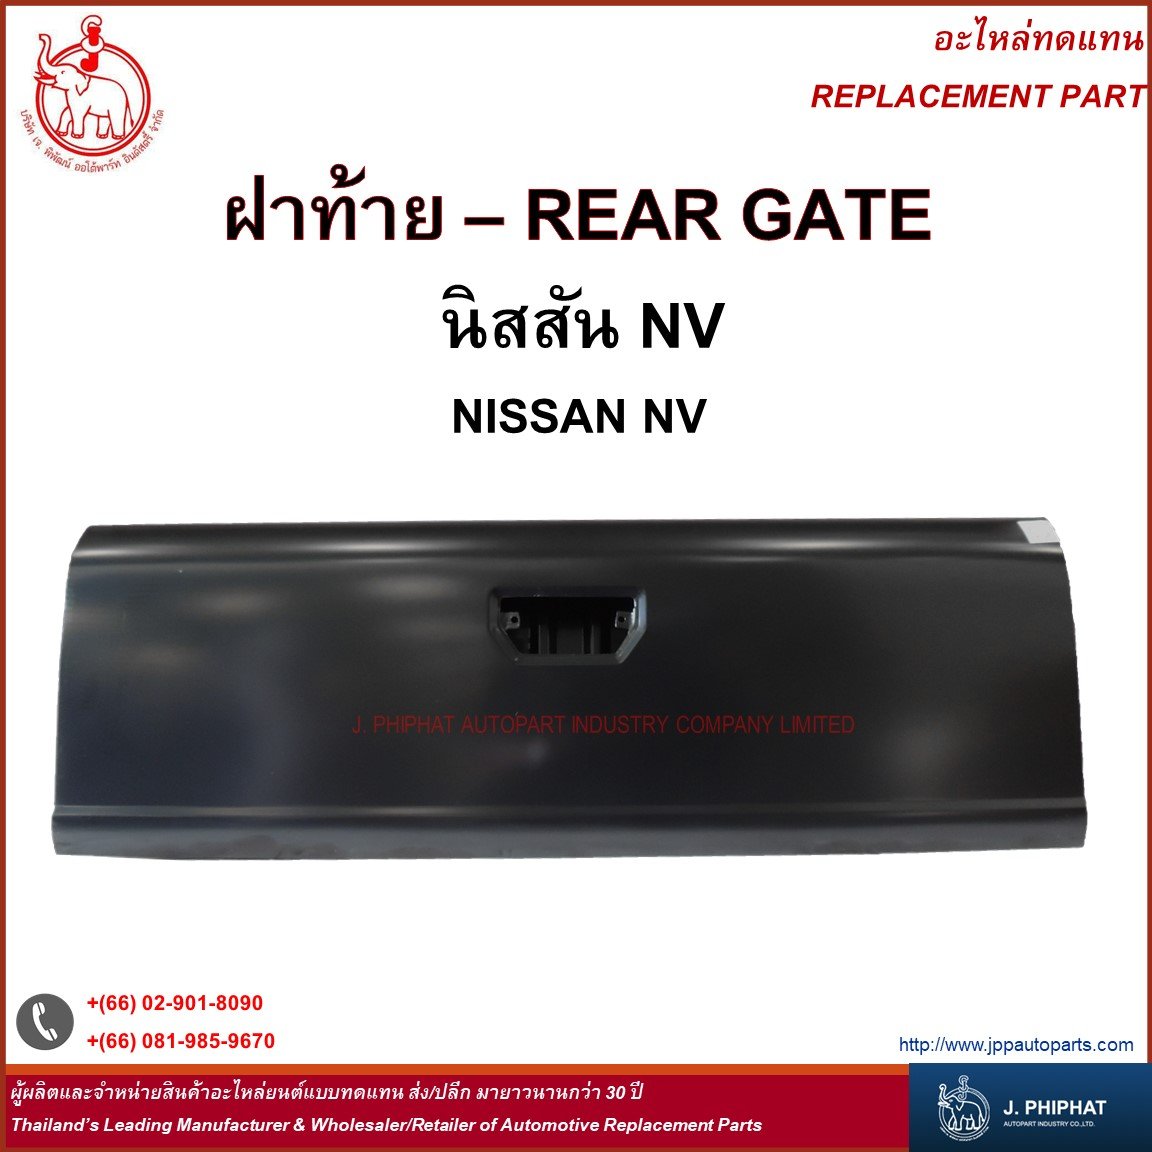 Rear Gate - Nissan NV